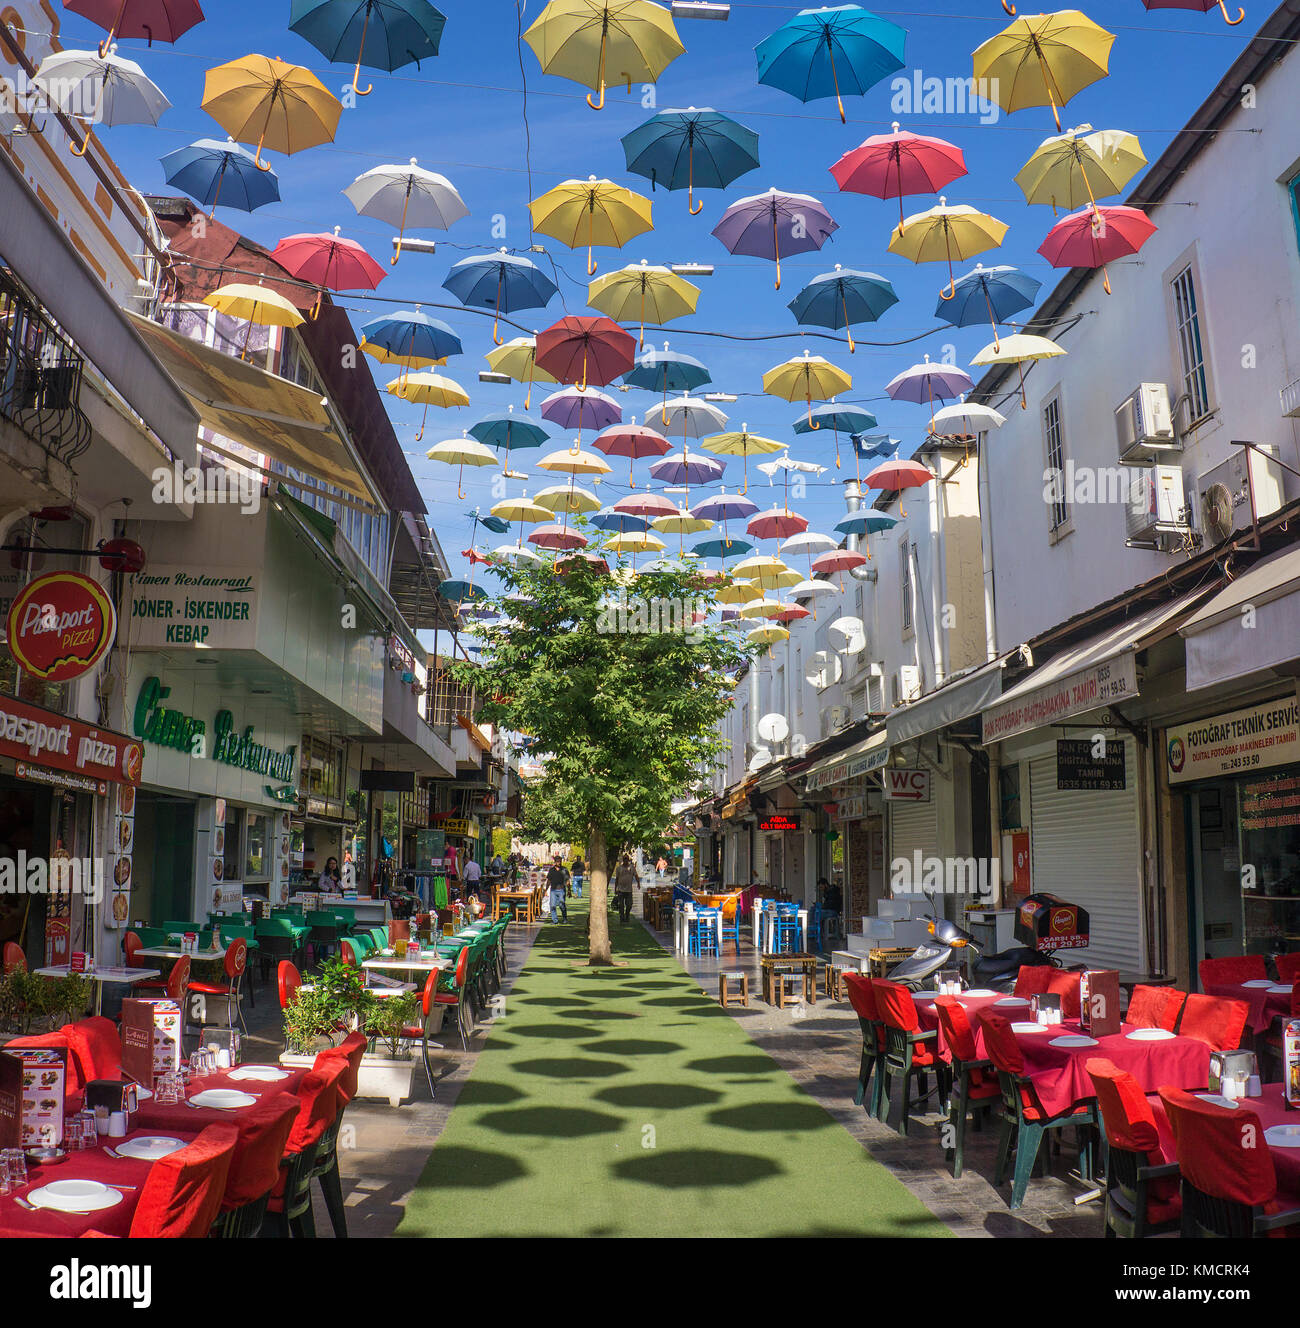 Calle paraguas de antalya fotografías e imágenes de alta resolución - Alamy